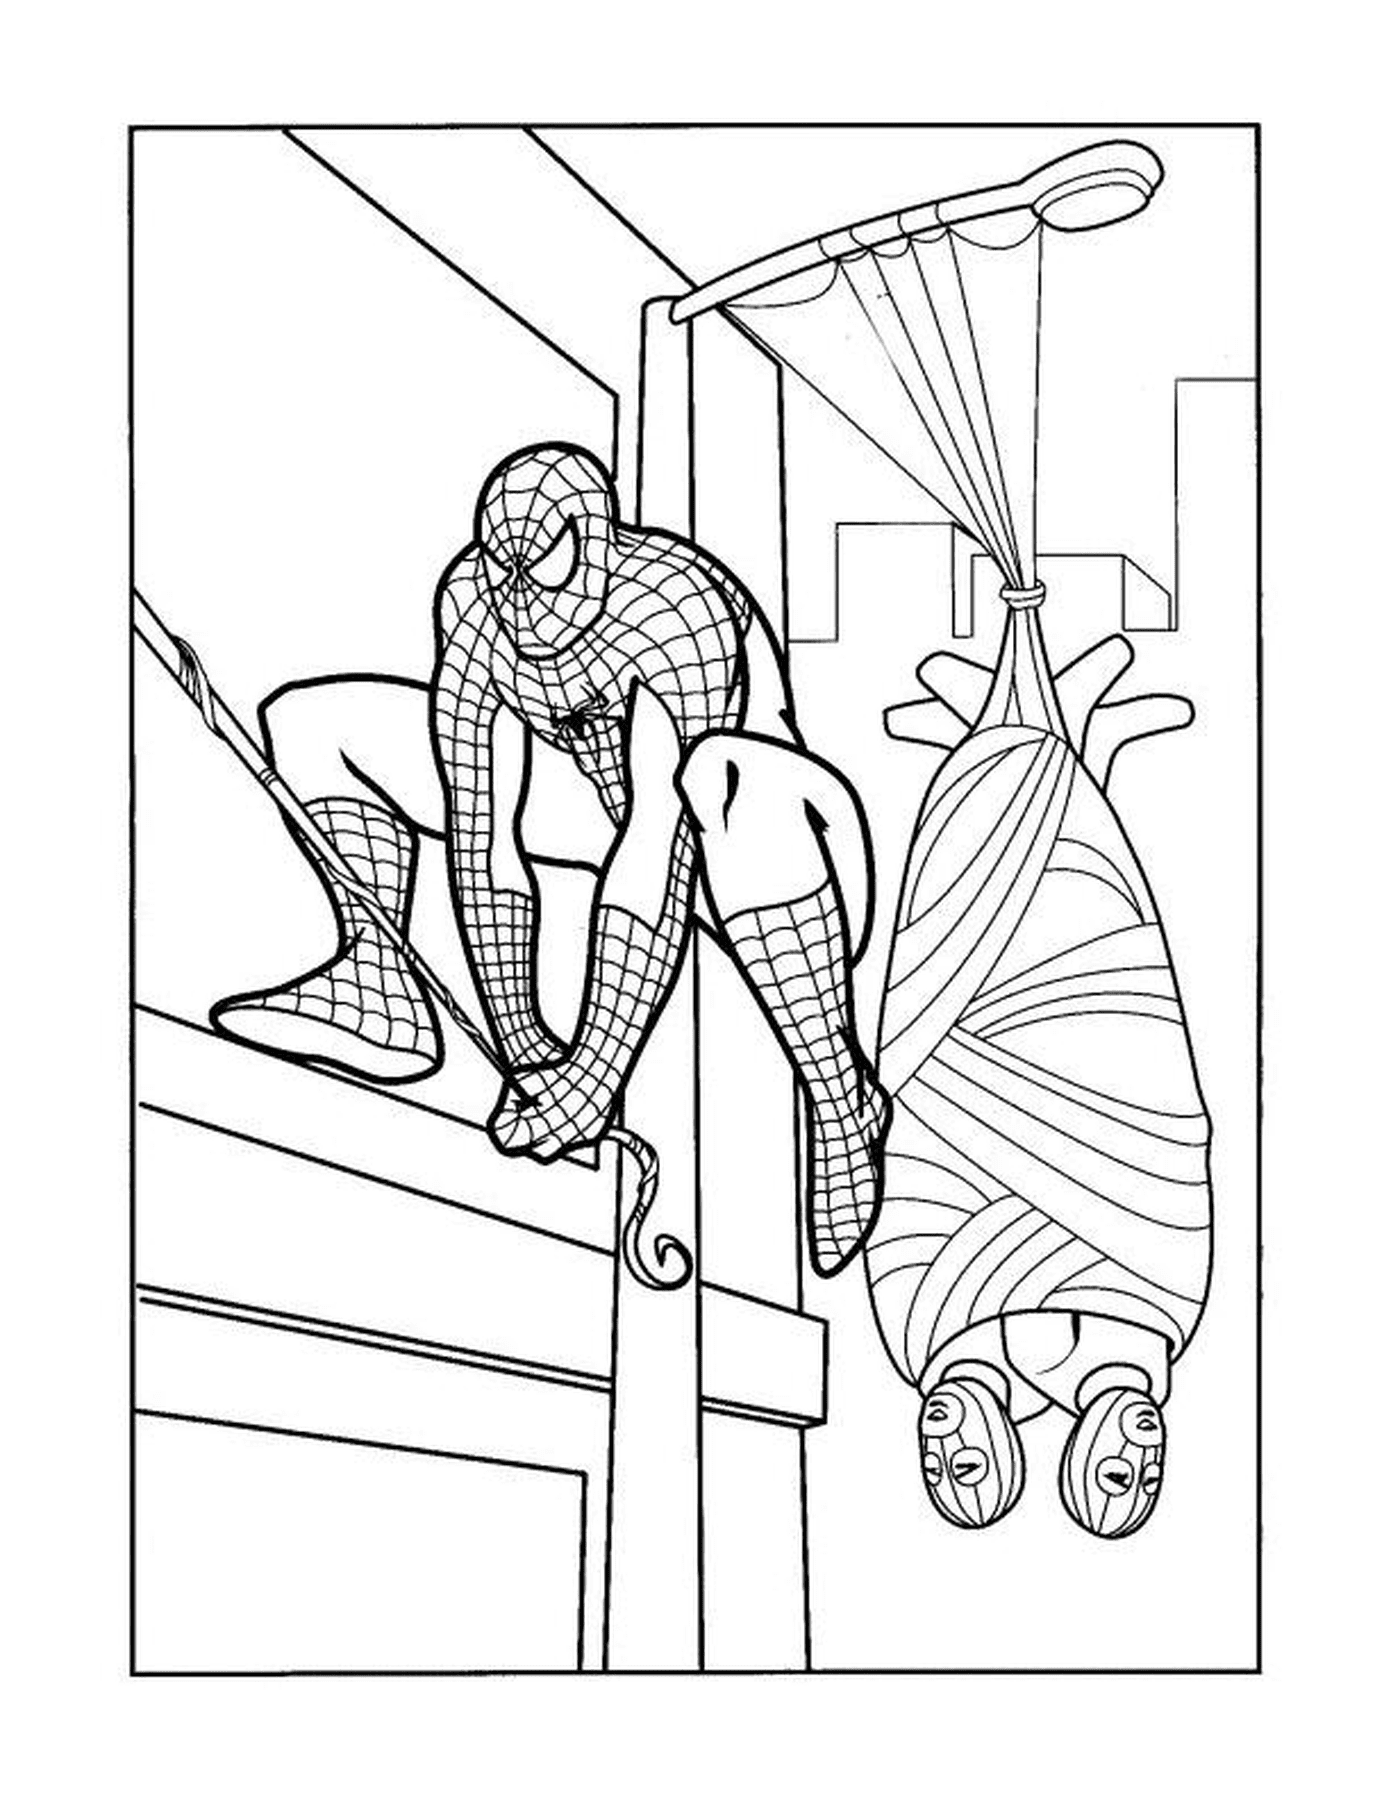  Spiderman climbing a building 